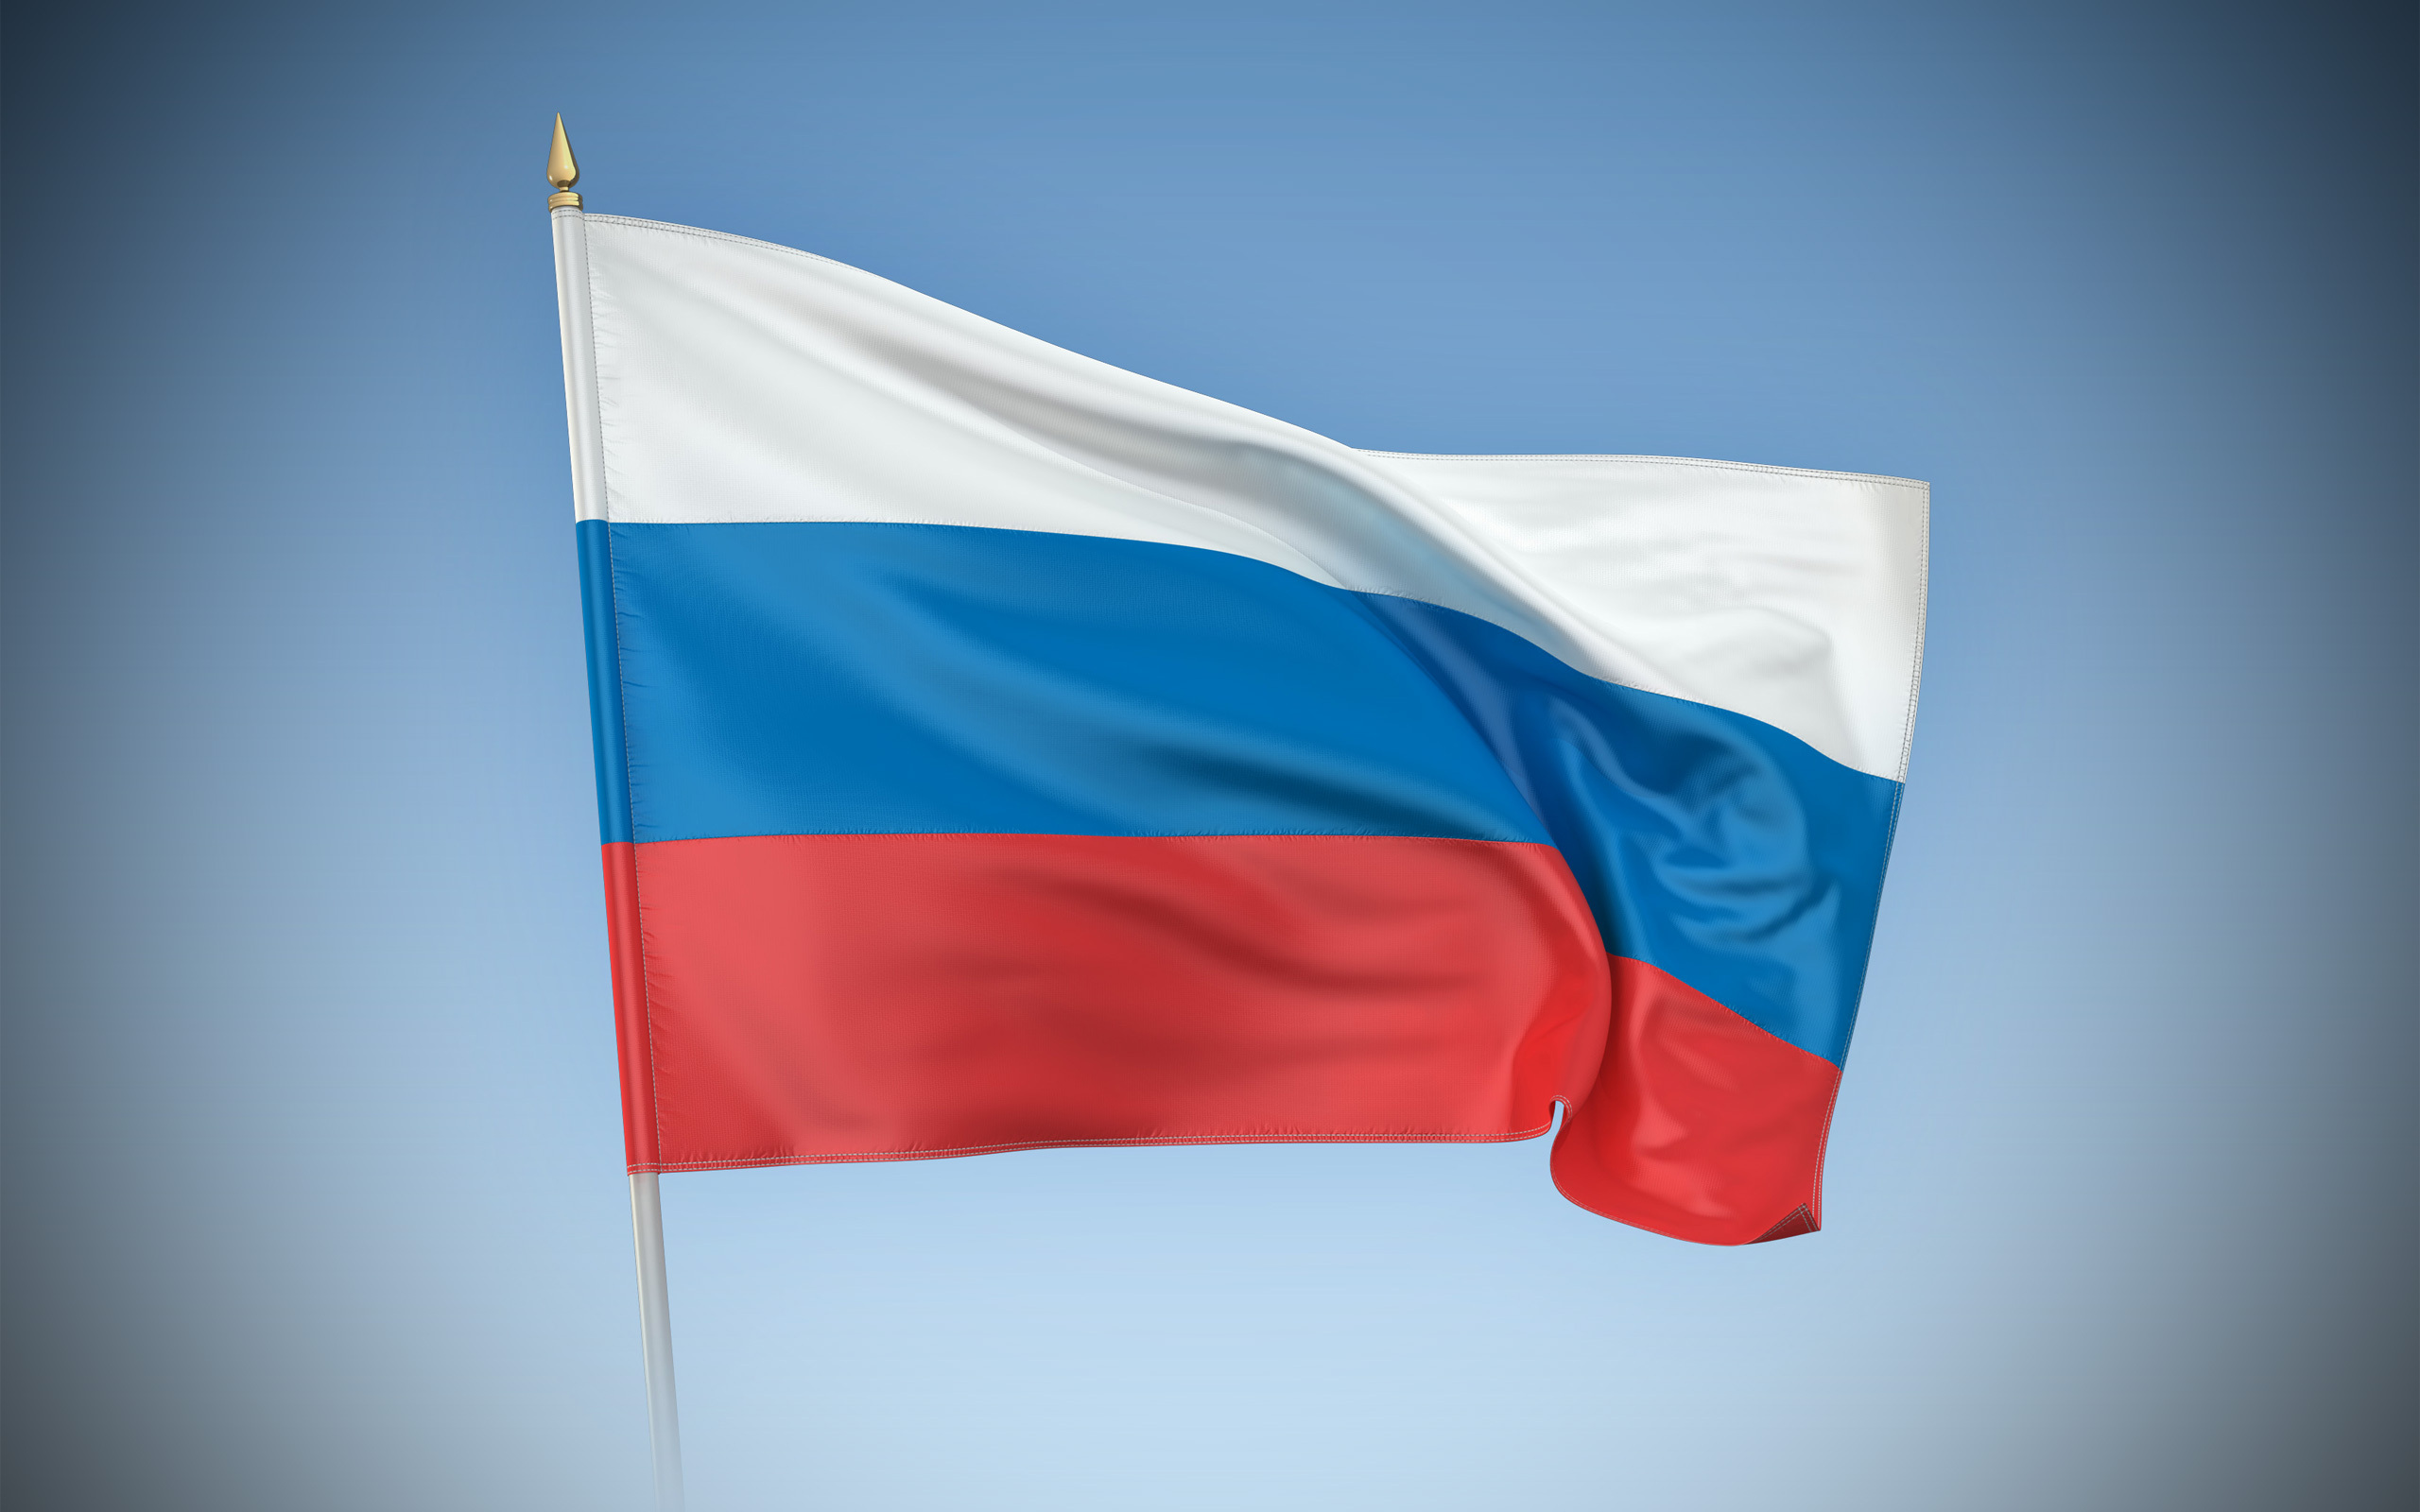 Обои 1 россия. Флаг РФ. Ф̆̈л̆̈ӑ̈г̆̈ р̆̈о̆̈с̆̈с̆̈й̈й̈. Флаг Российской Федерации Триколор. Развеваюшийся флаг Российской Федерации.